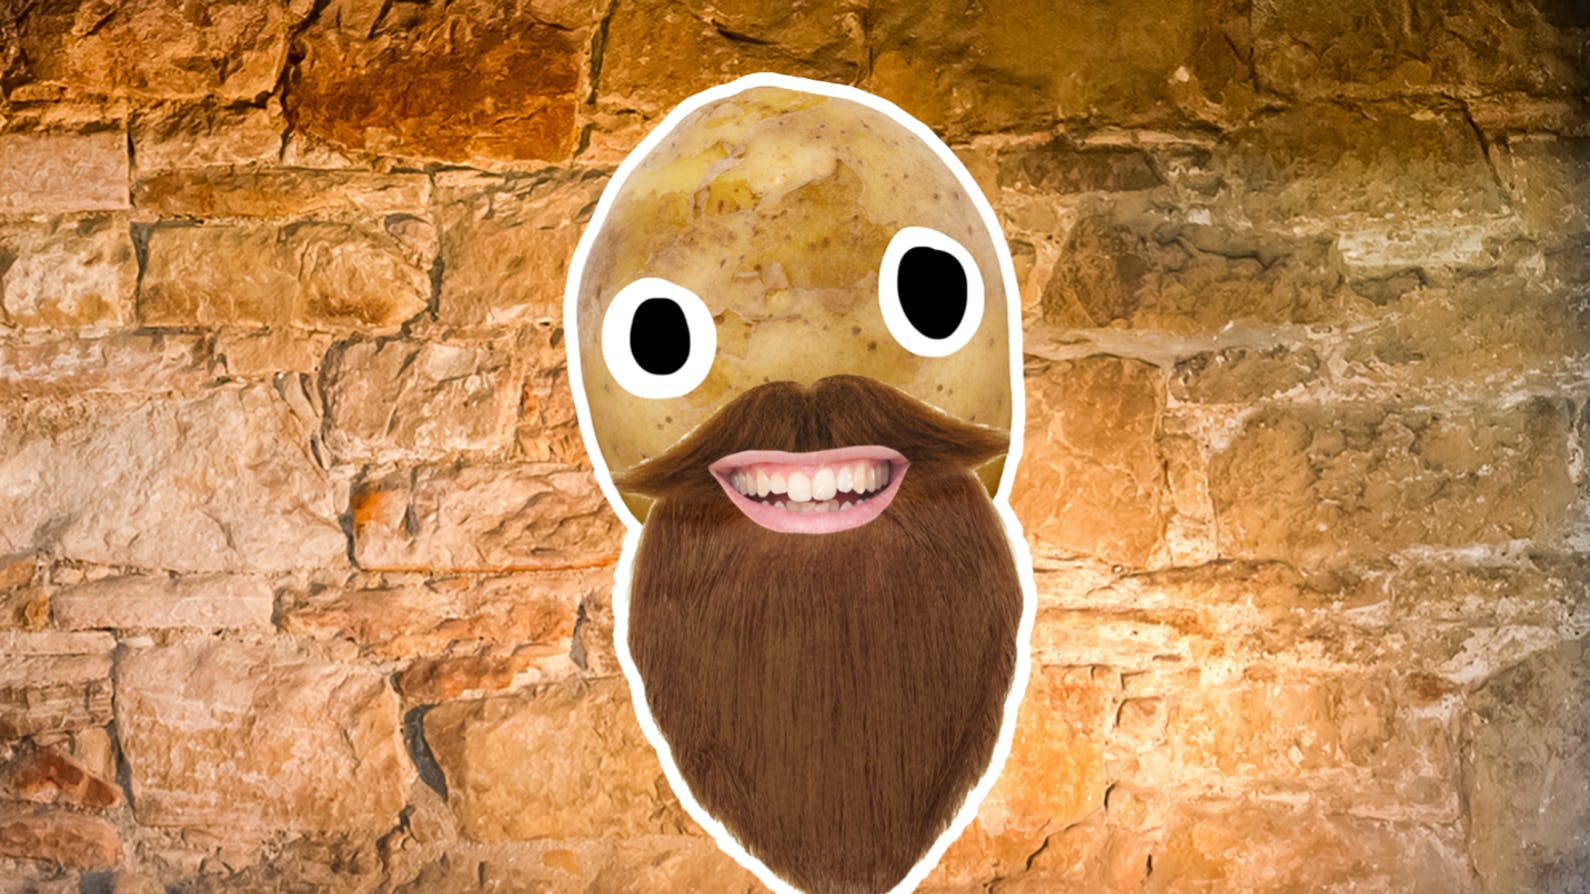 A bearded potato